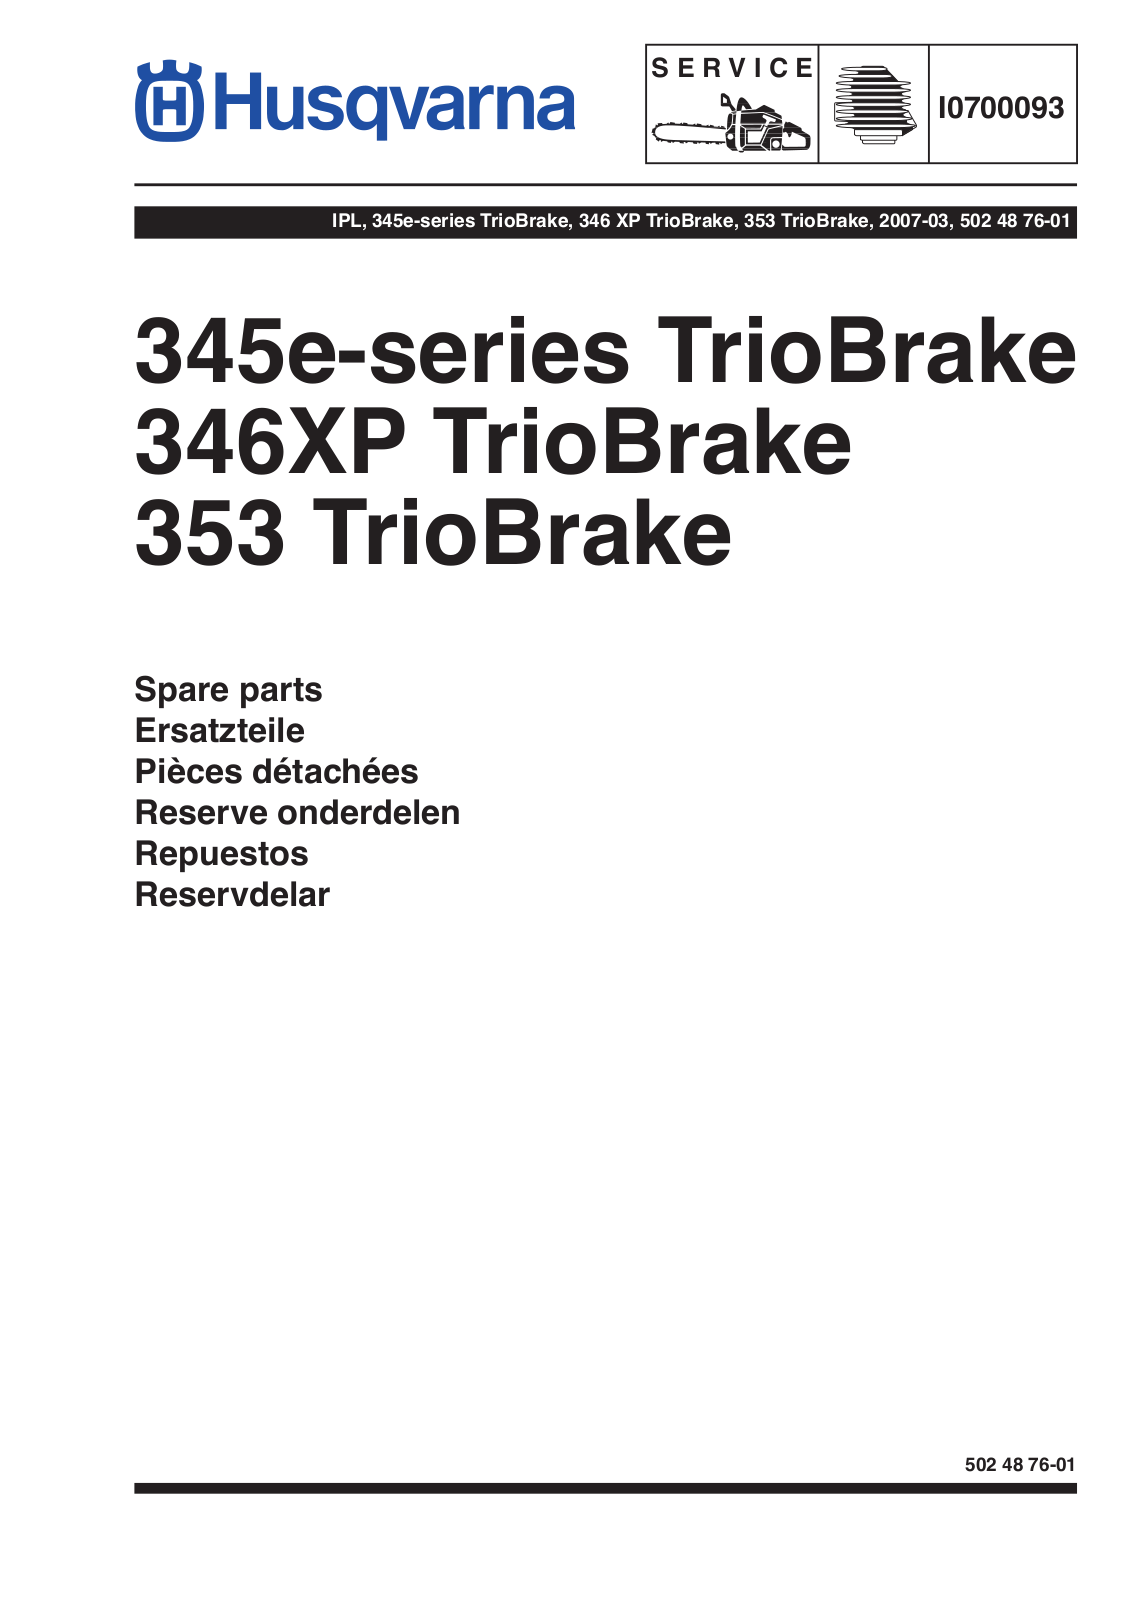 Husqvarna 346 XP TrioBrake parts catalog